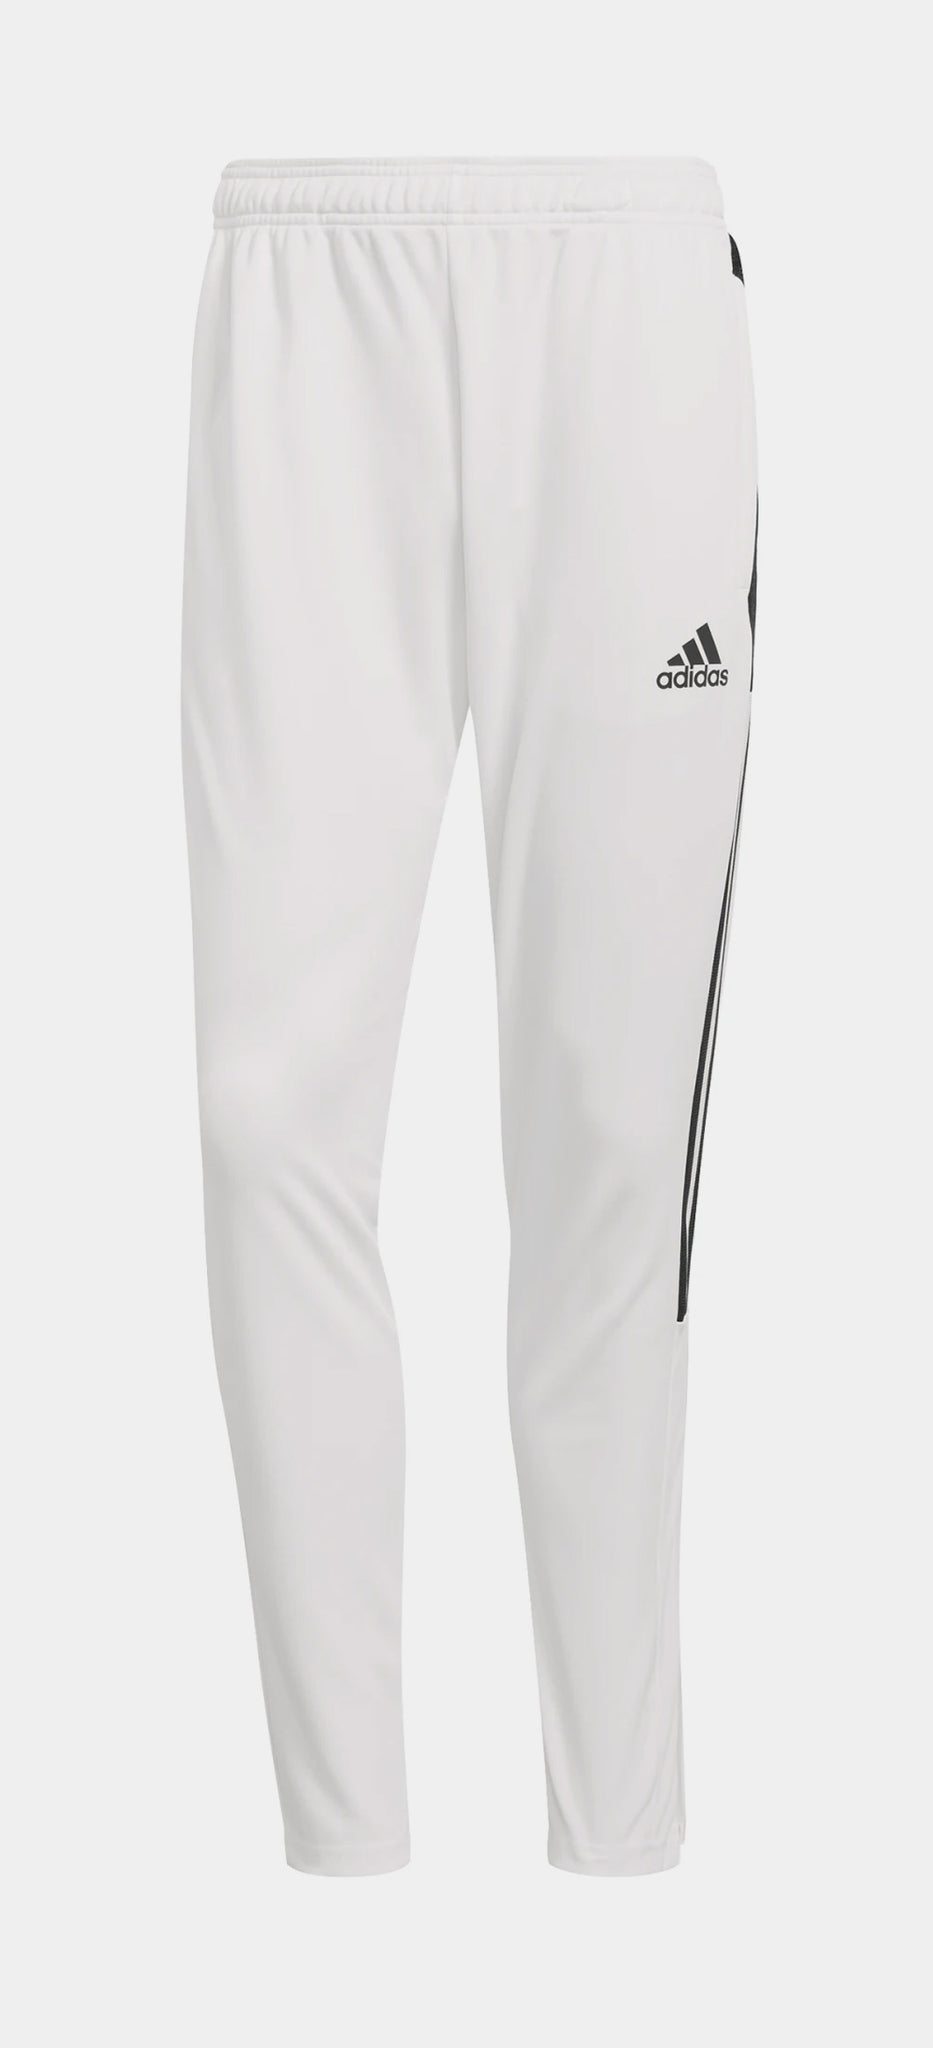 adidas Tiro 17 Training Pants Slim Fit Track Bottoms (Youth & Adult)  Black/White | eBay